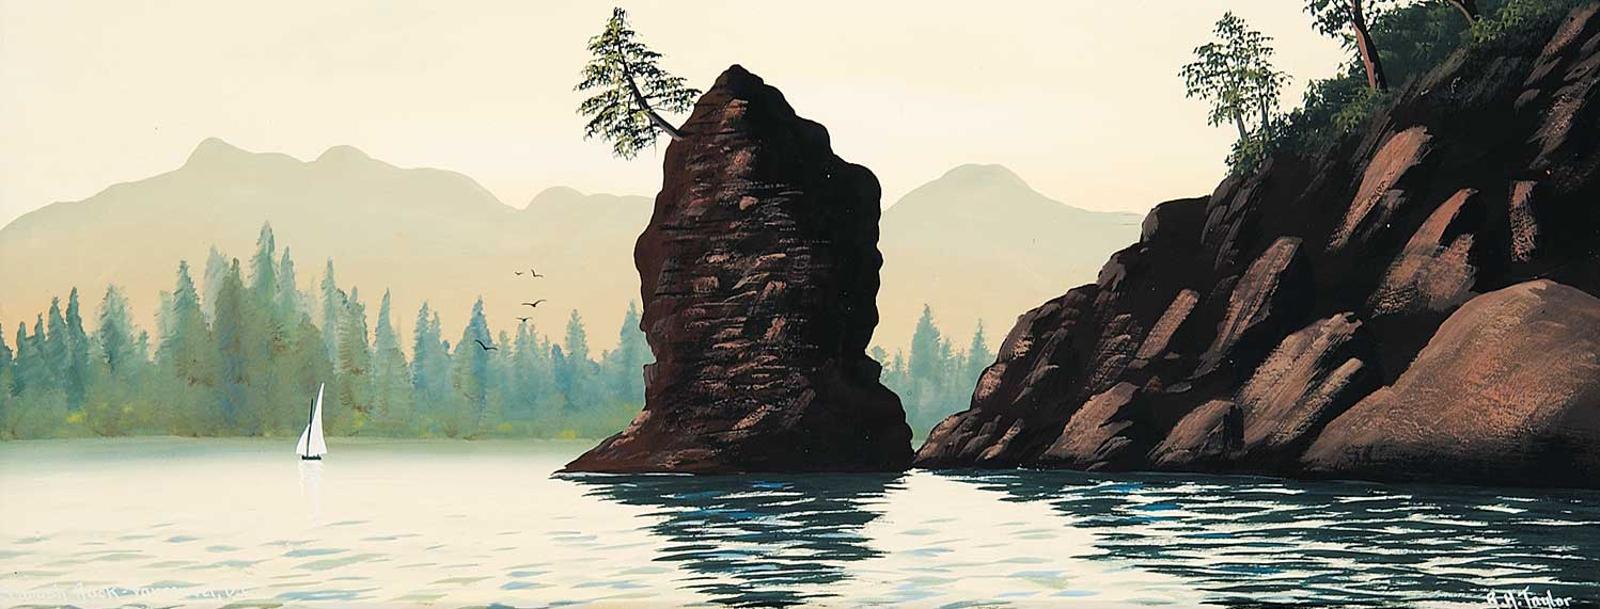 R.H. Taylor - Siwash Rock, Vancouver, B.C.